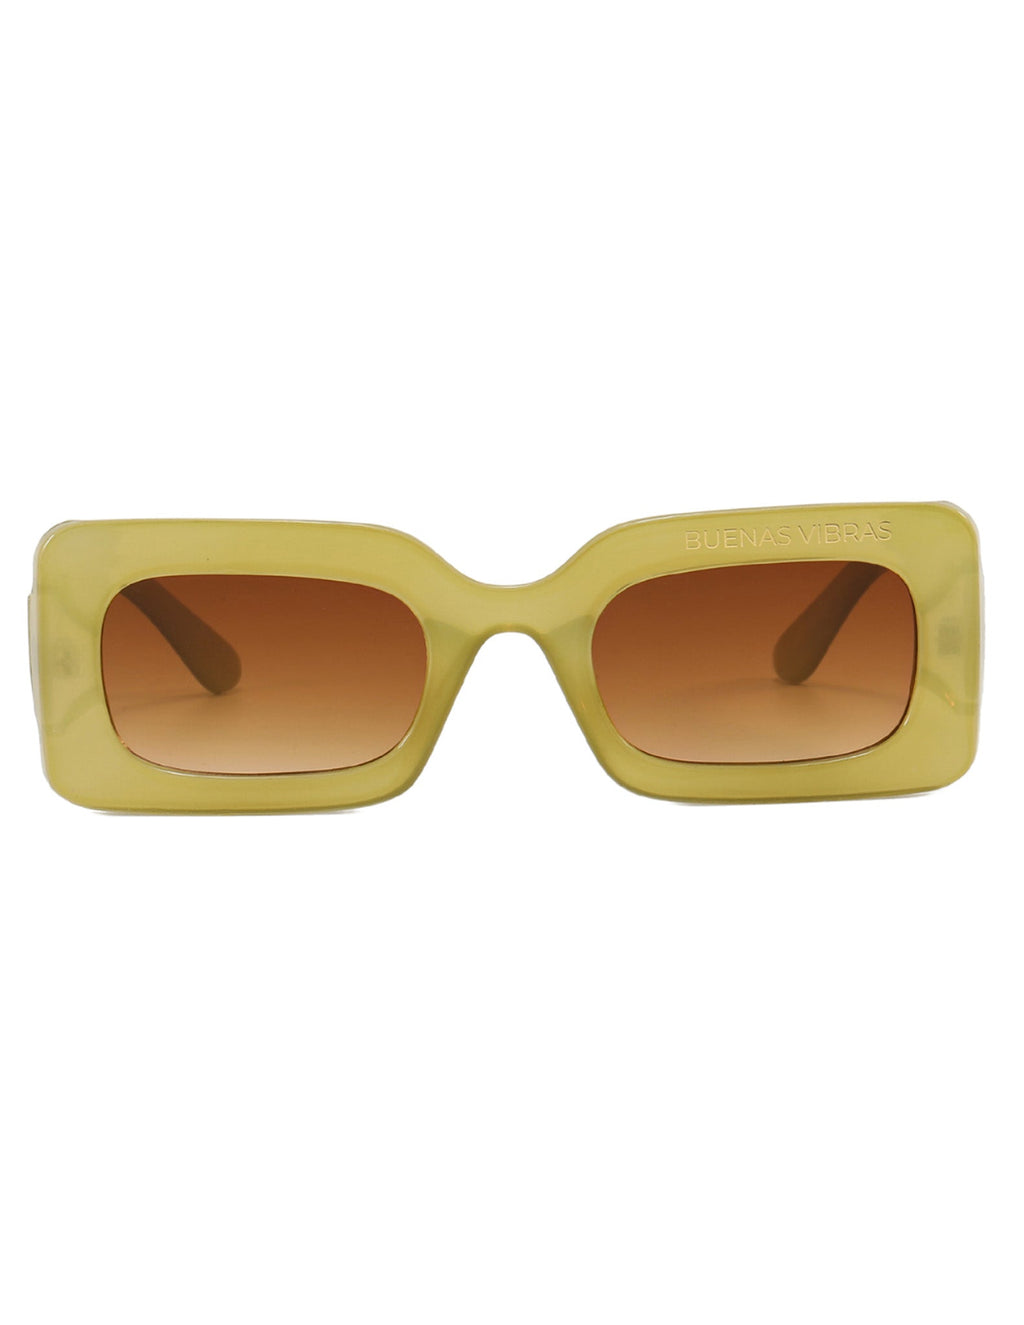 Buenas Vibras Sunglasses | Green | Blue Light Blocking Glasses